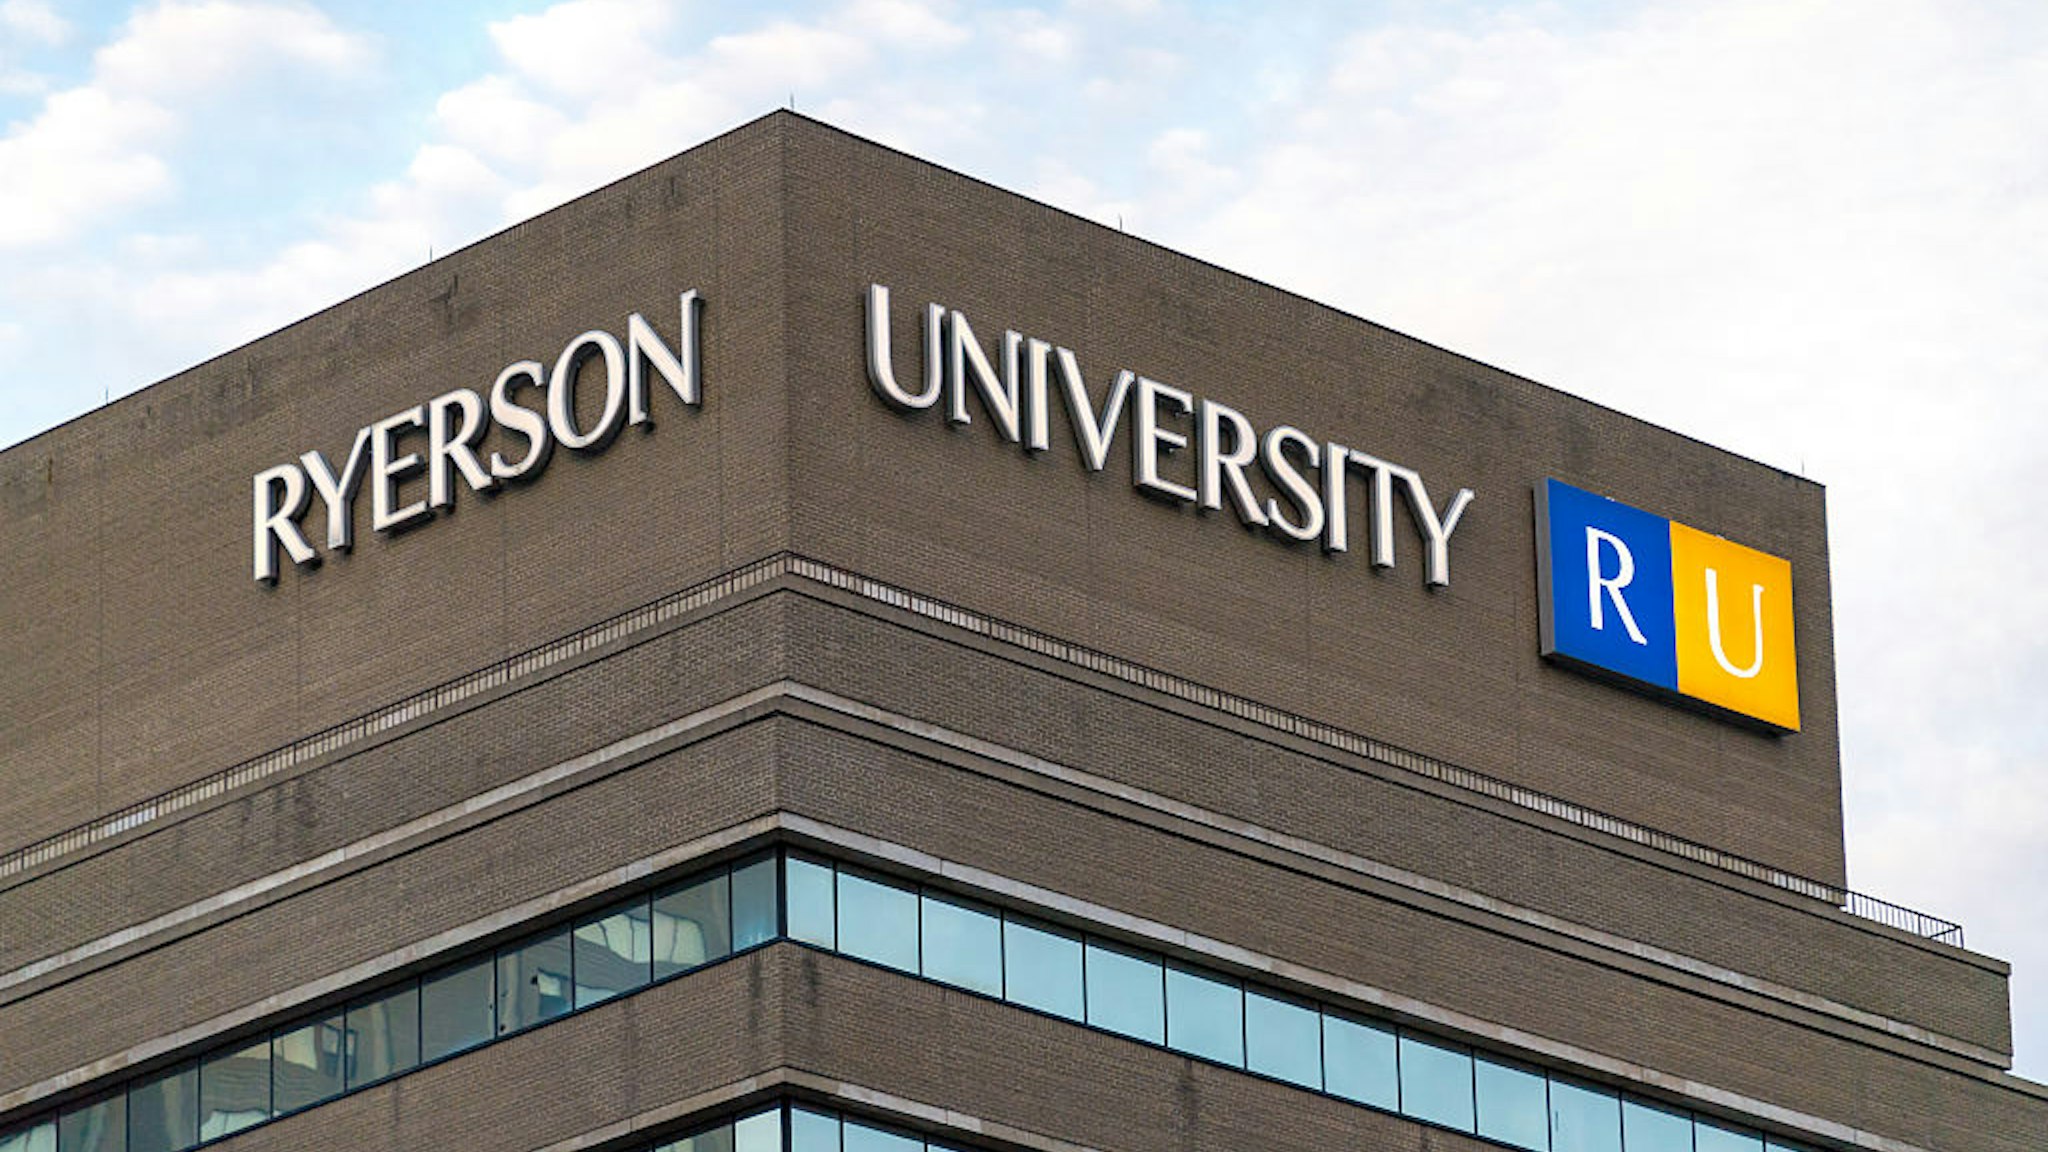 Ryerson University modern building facade exterior: School's logo at the top of the building.